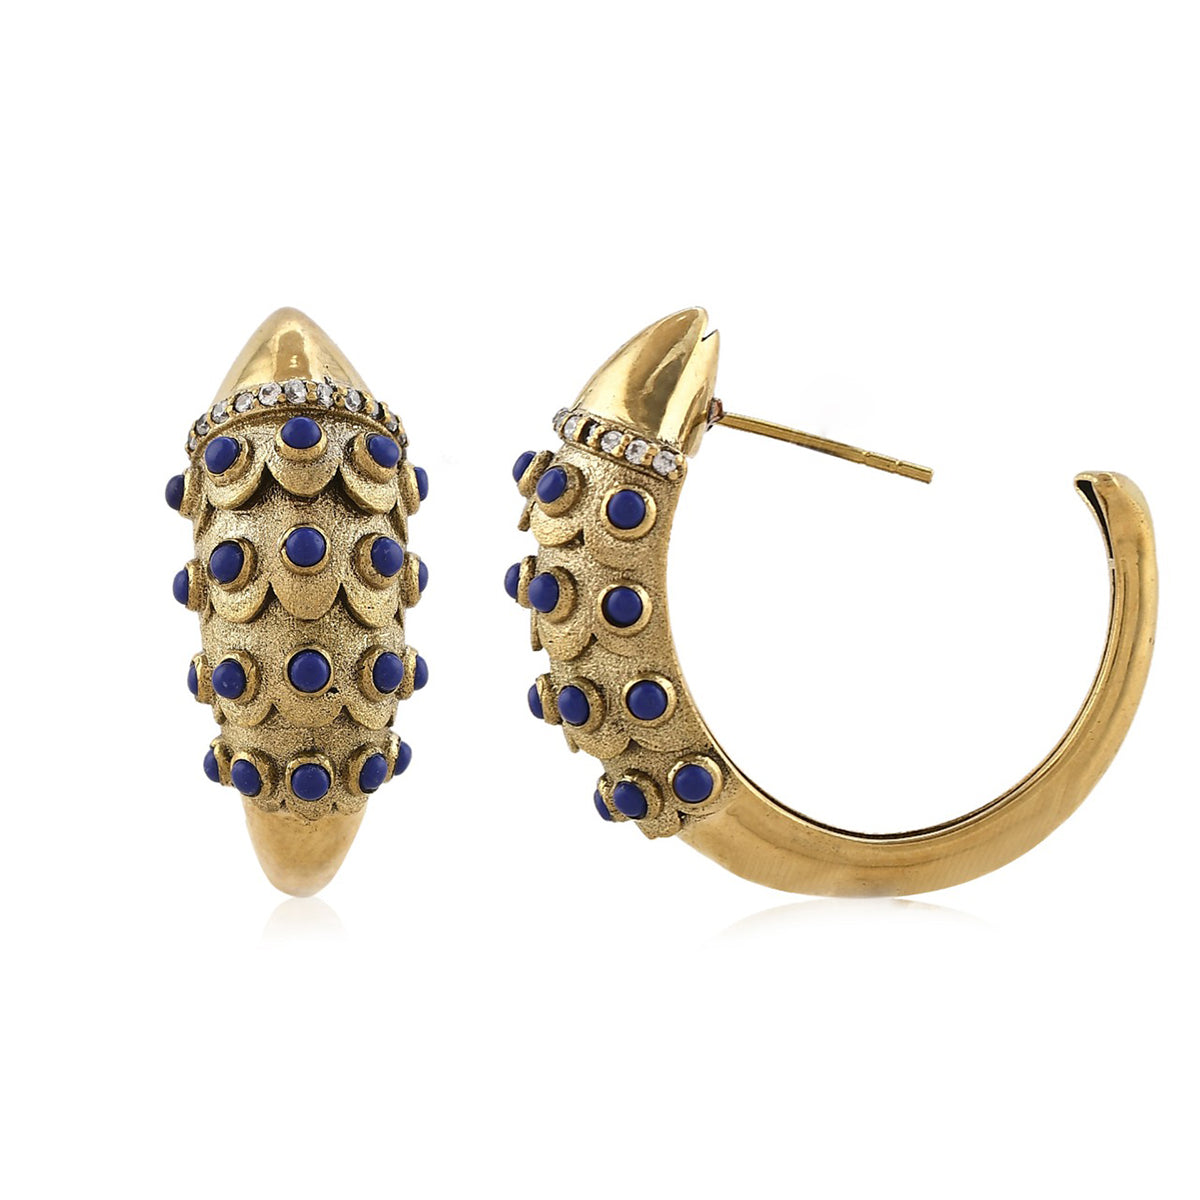  Gold blue stone earrings with zircon